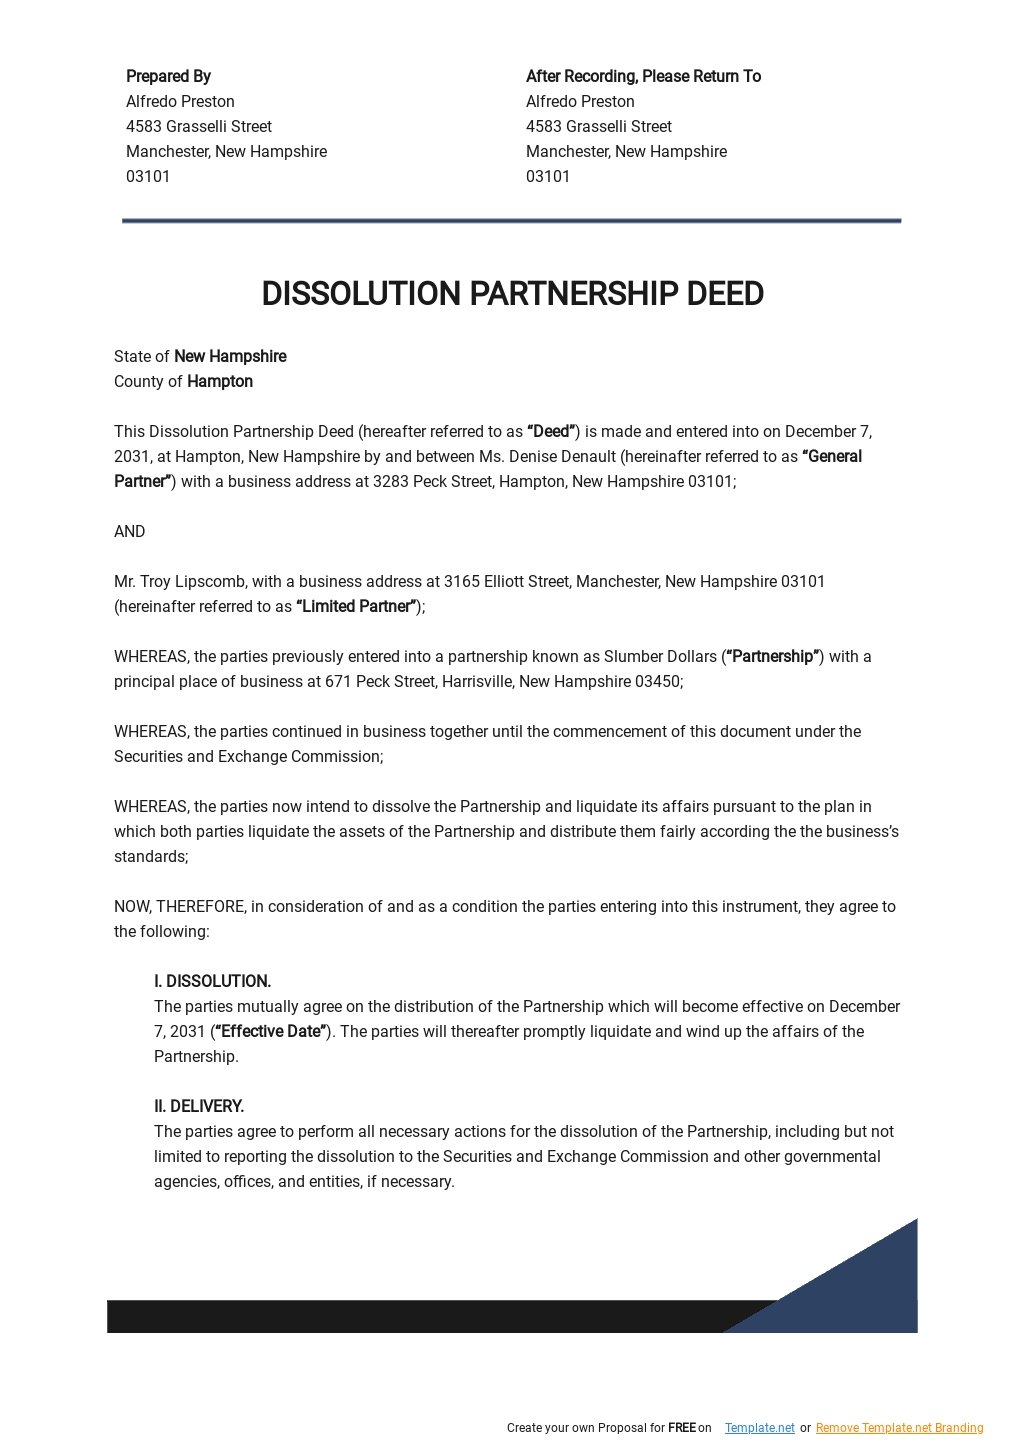 Dissolution Partnership Deed Template